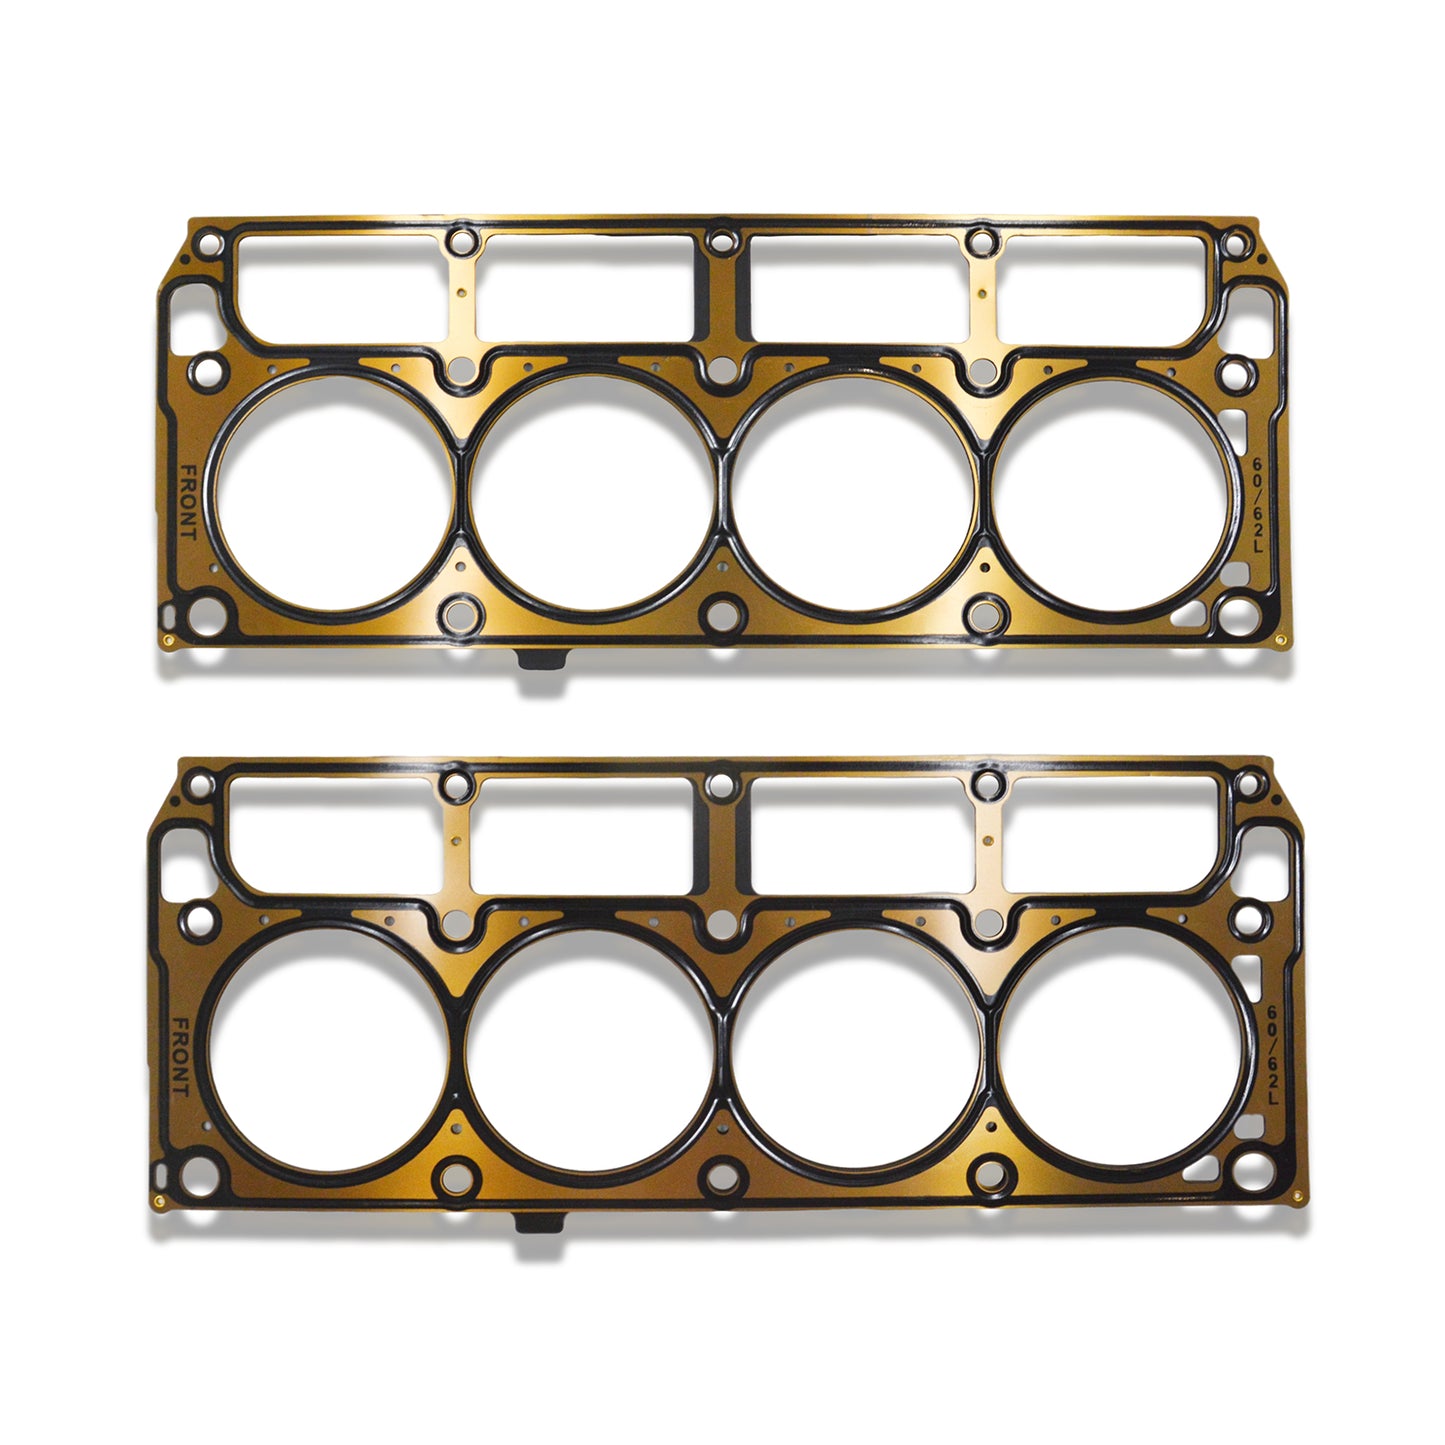 GOCPB MLS Head Gasket Set Compatible with LS9 Oil Pan Gasket Sets Head Gaskets for GM Chevy LS1/LS6/LQ4/LQ9/4.8L 5.3L 5.7L 6.0L